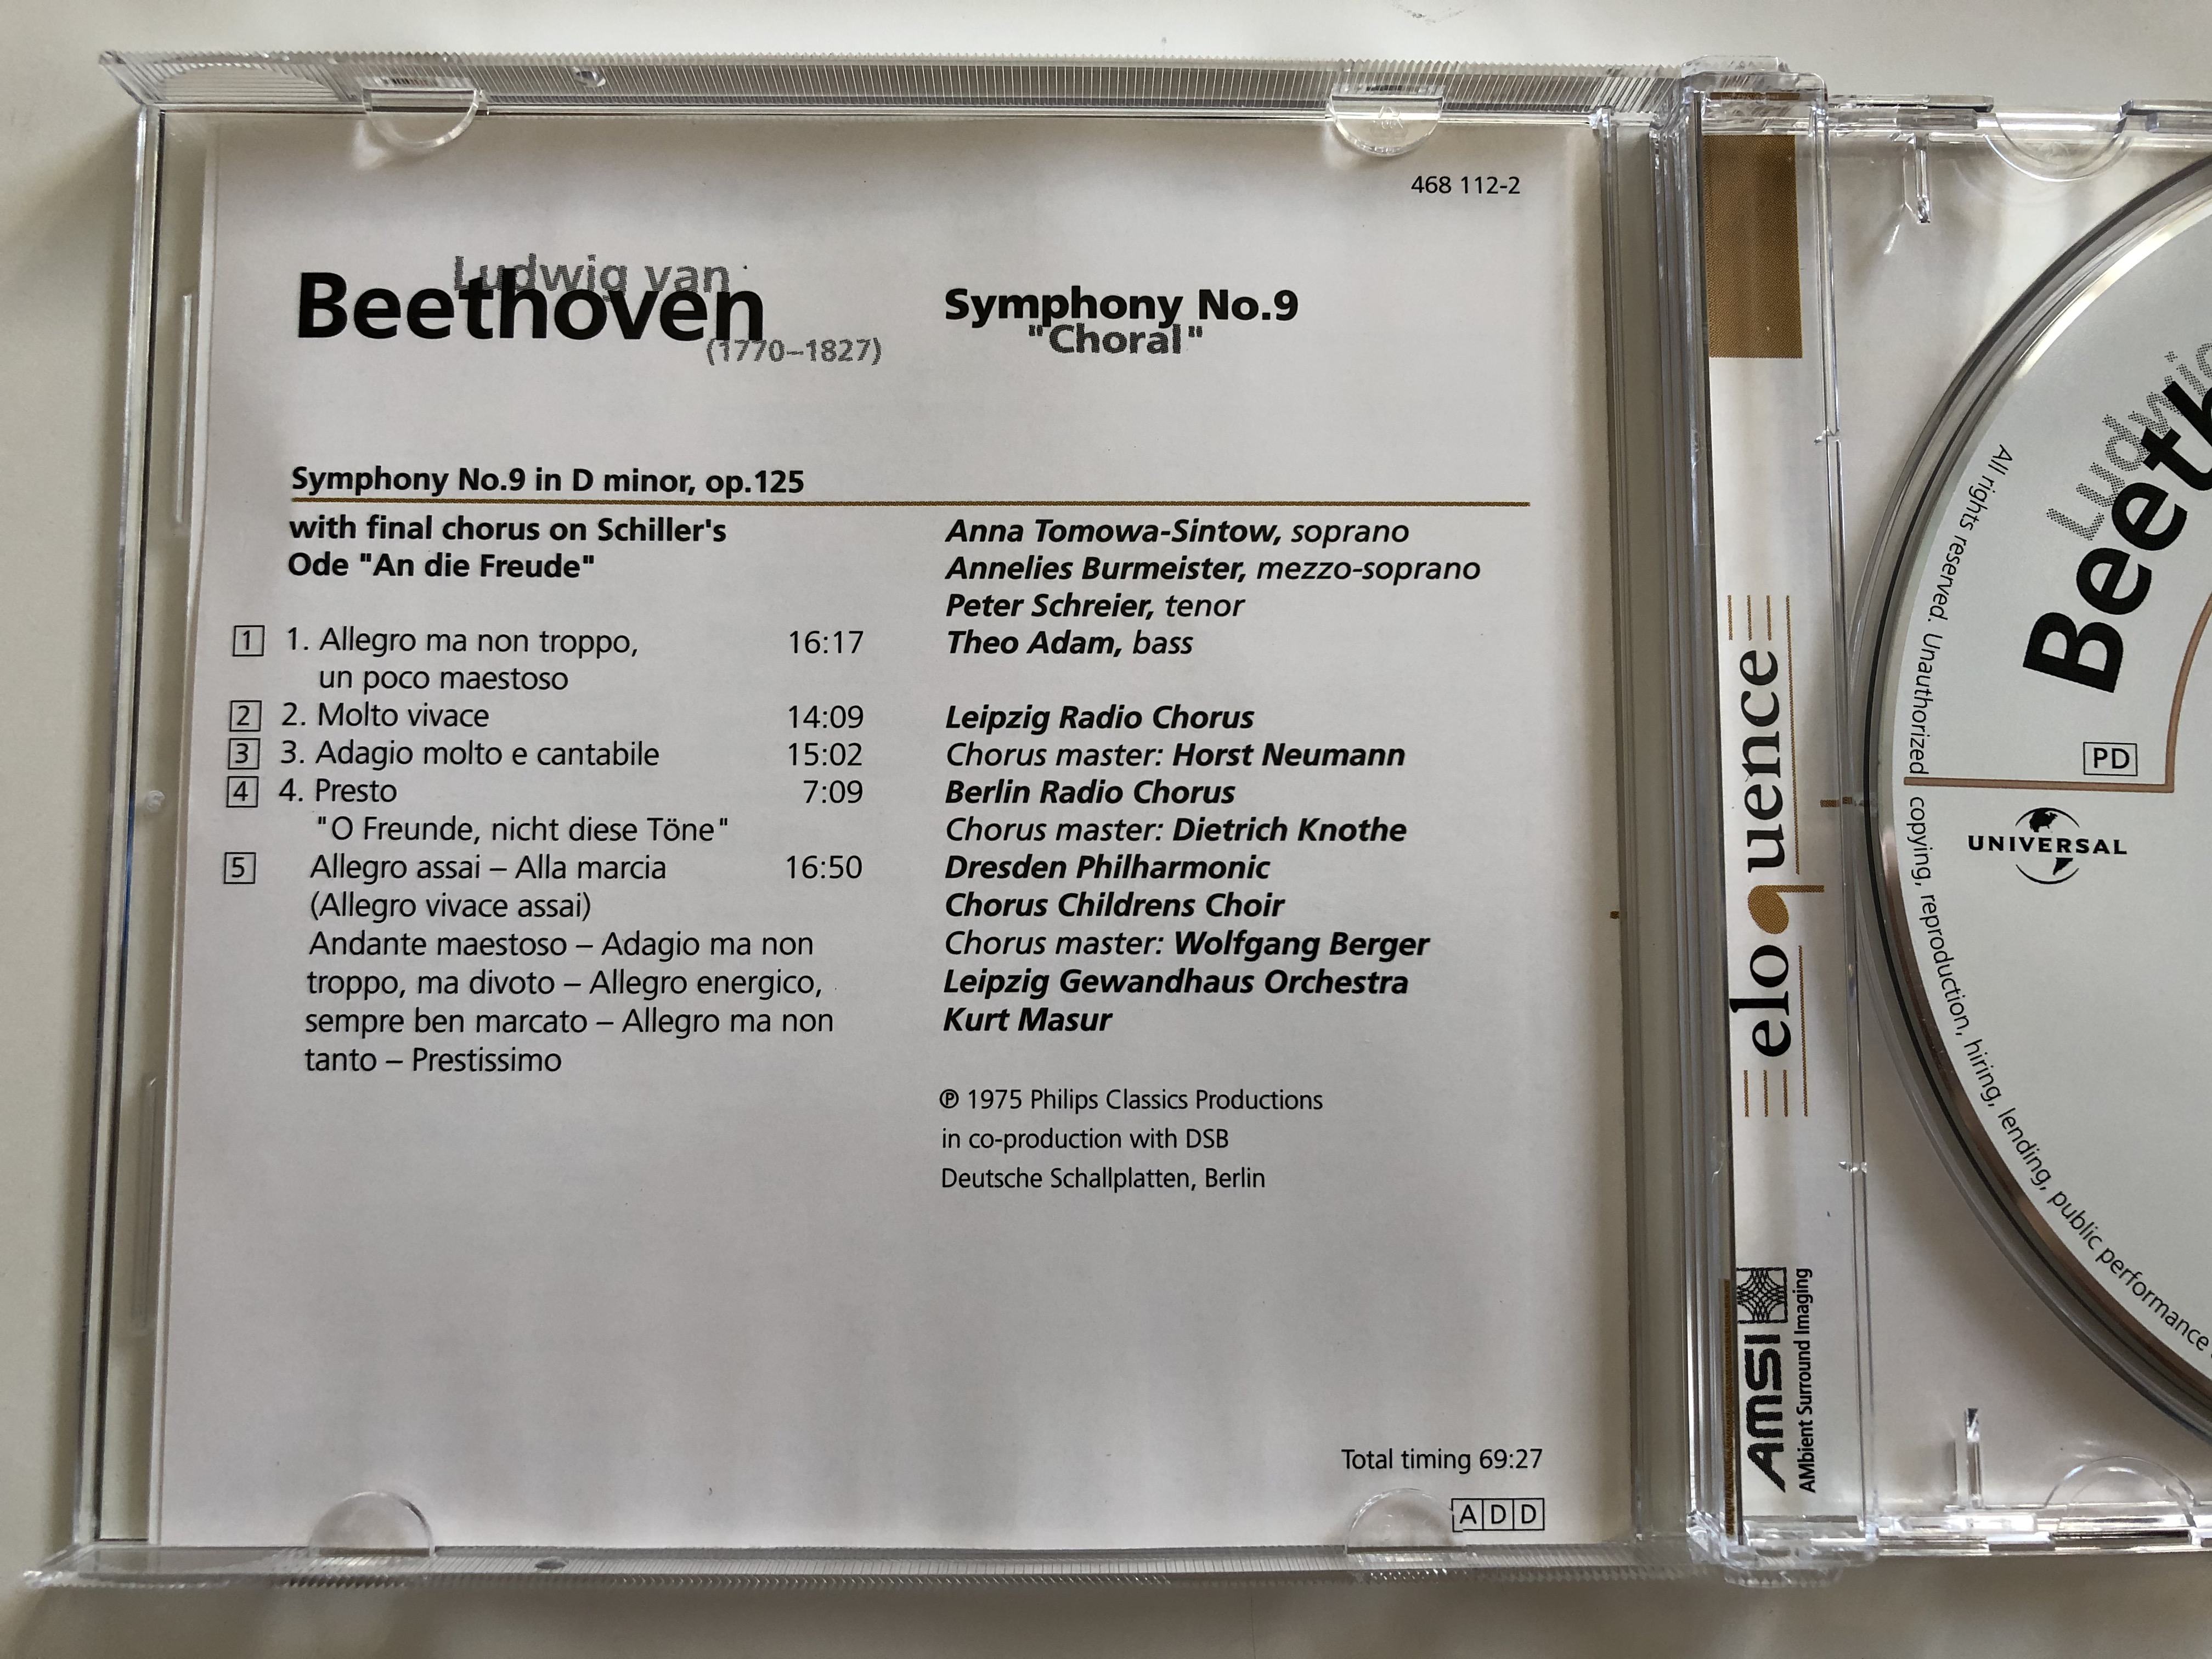 ludwig-van-beethoven-symphonie-nr.-9-choral-tomowa-sintow-burmeister-schreier-adam-leipzig-radio-chorus-leipzig-gewandhaus-orchestra-kurt-masur-philips-classics-audio-cd-1975-468-.jpg